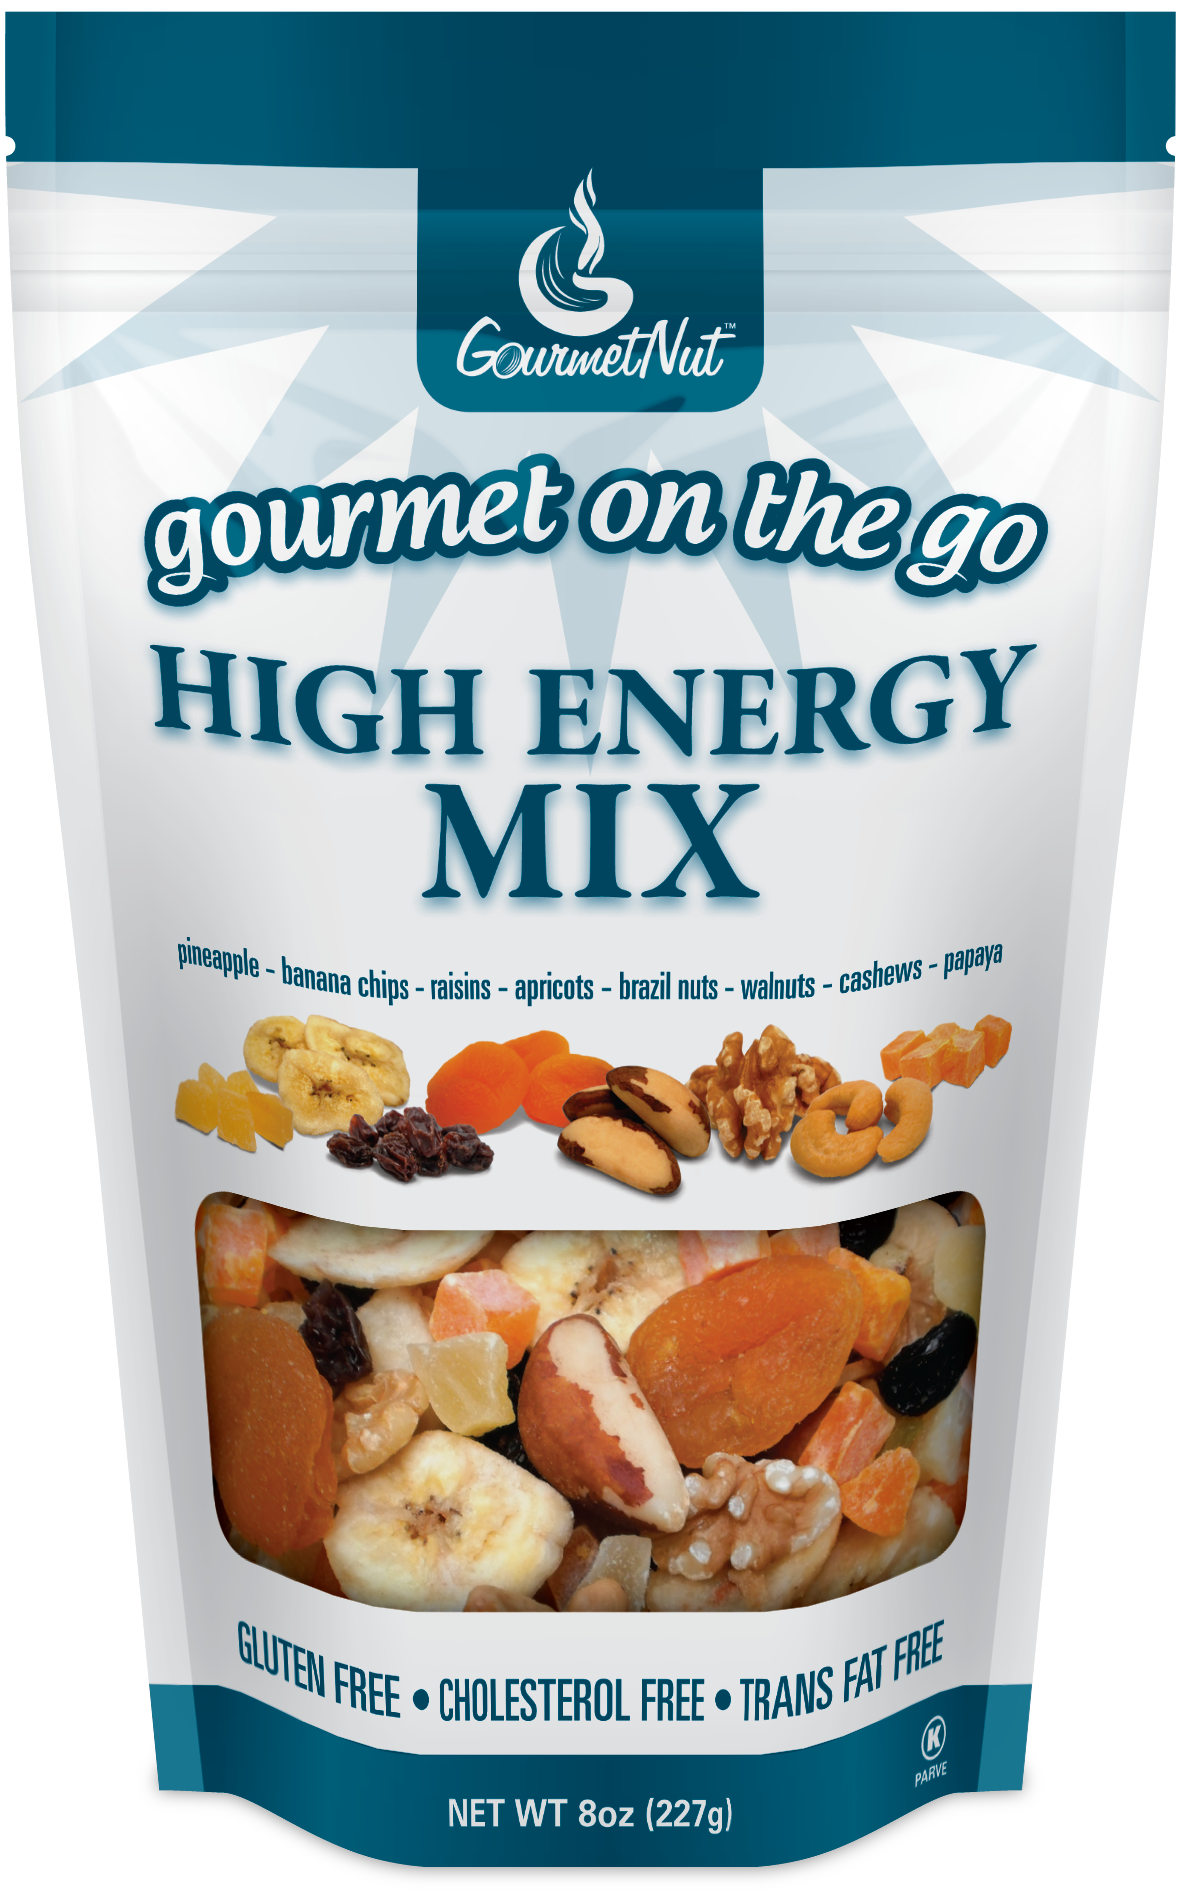 Gourmet Nut High Energy Mix 7-Nov-14